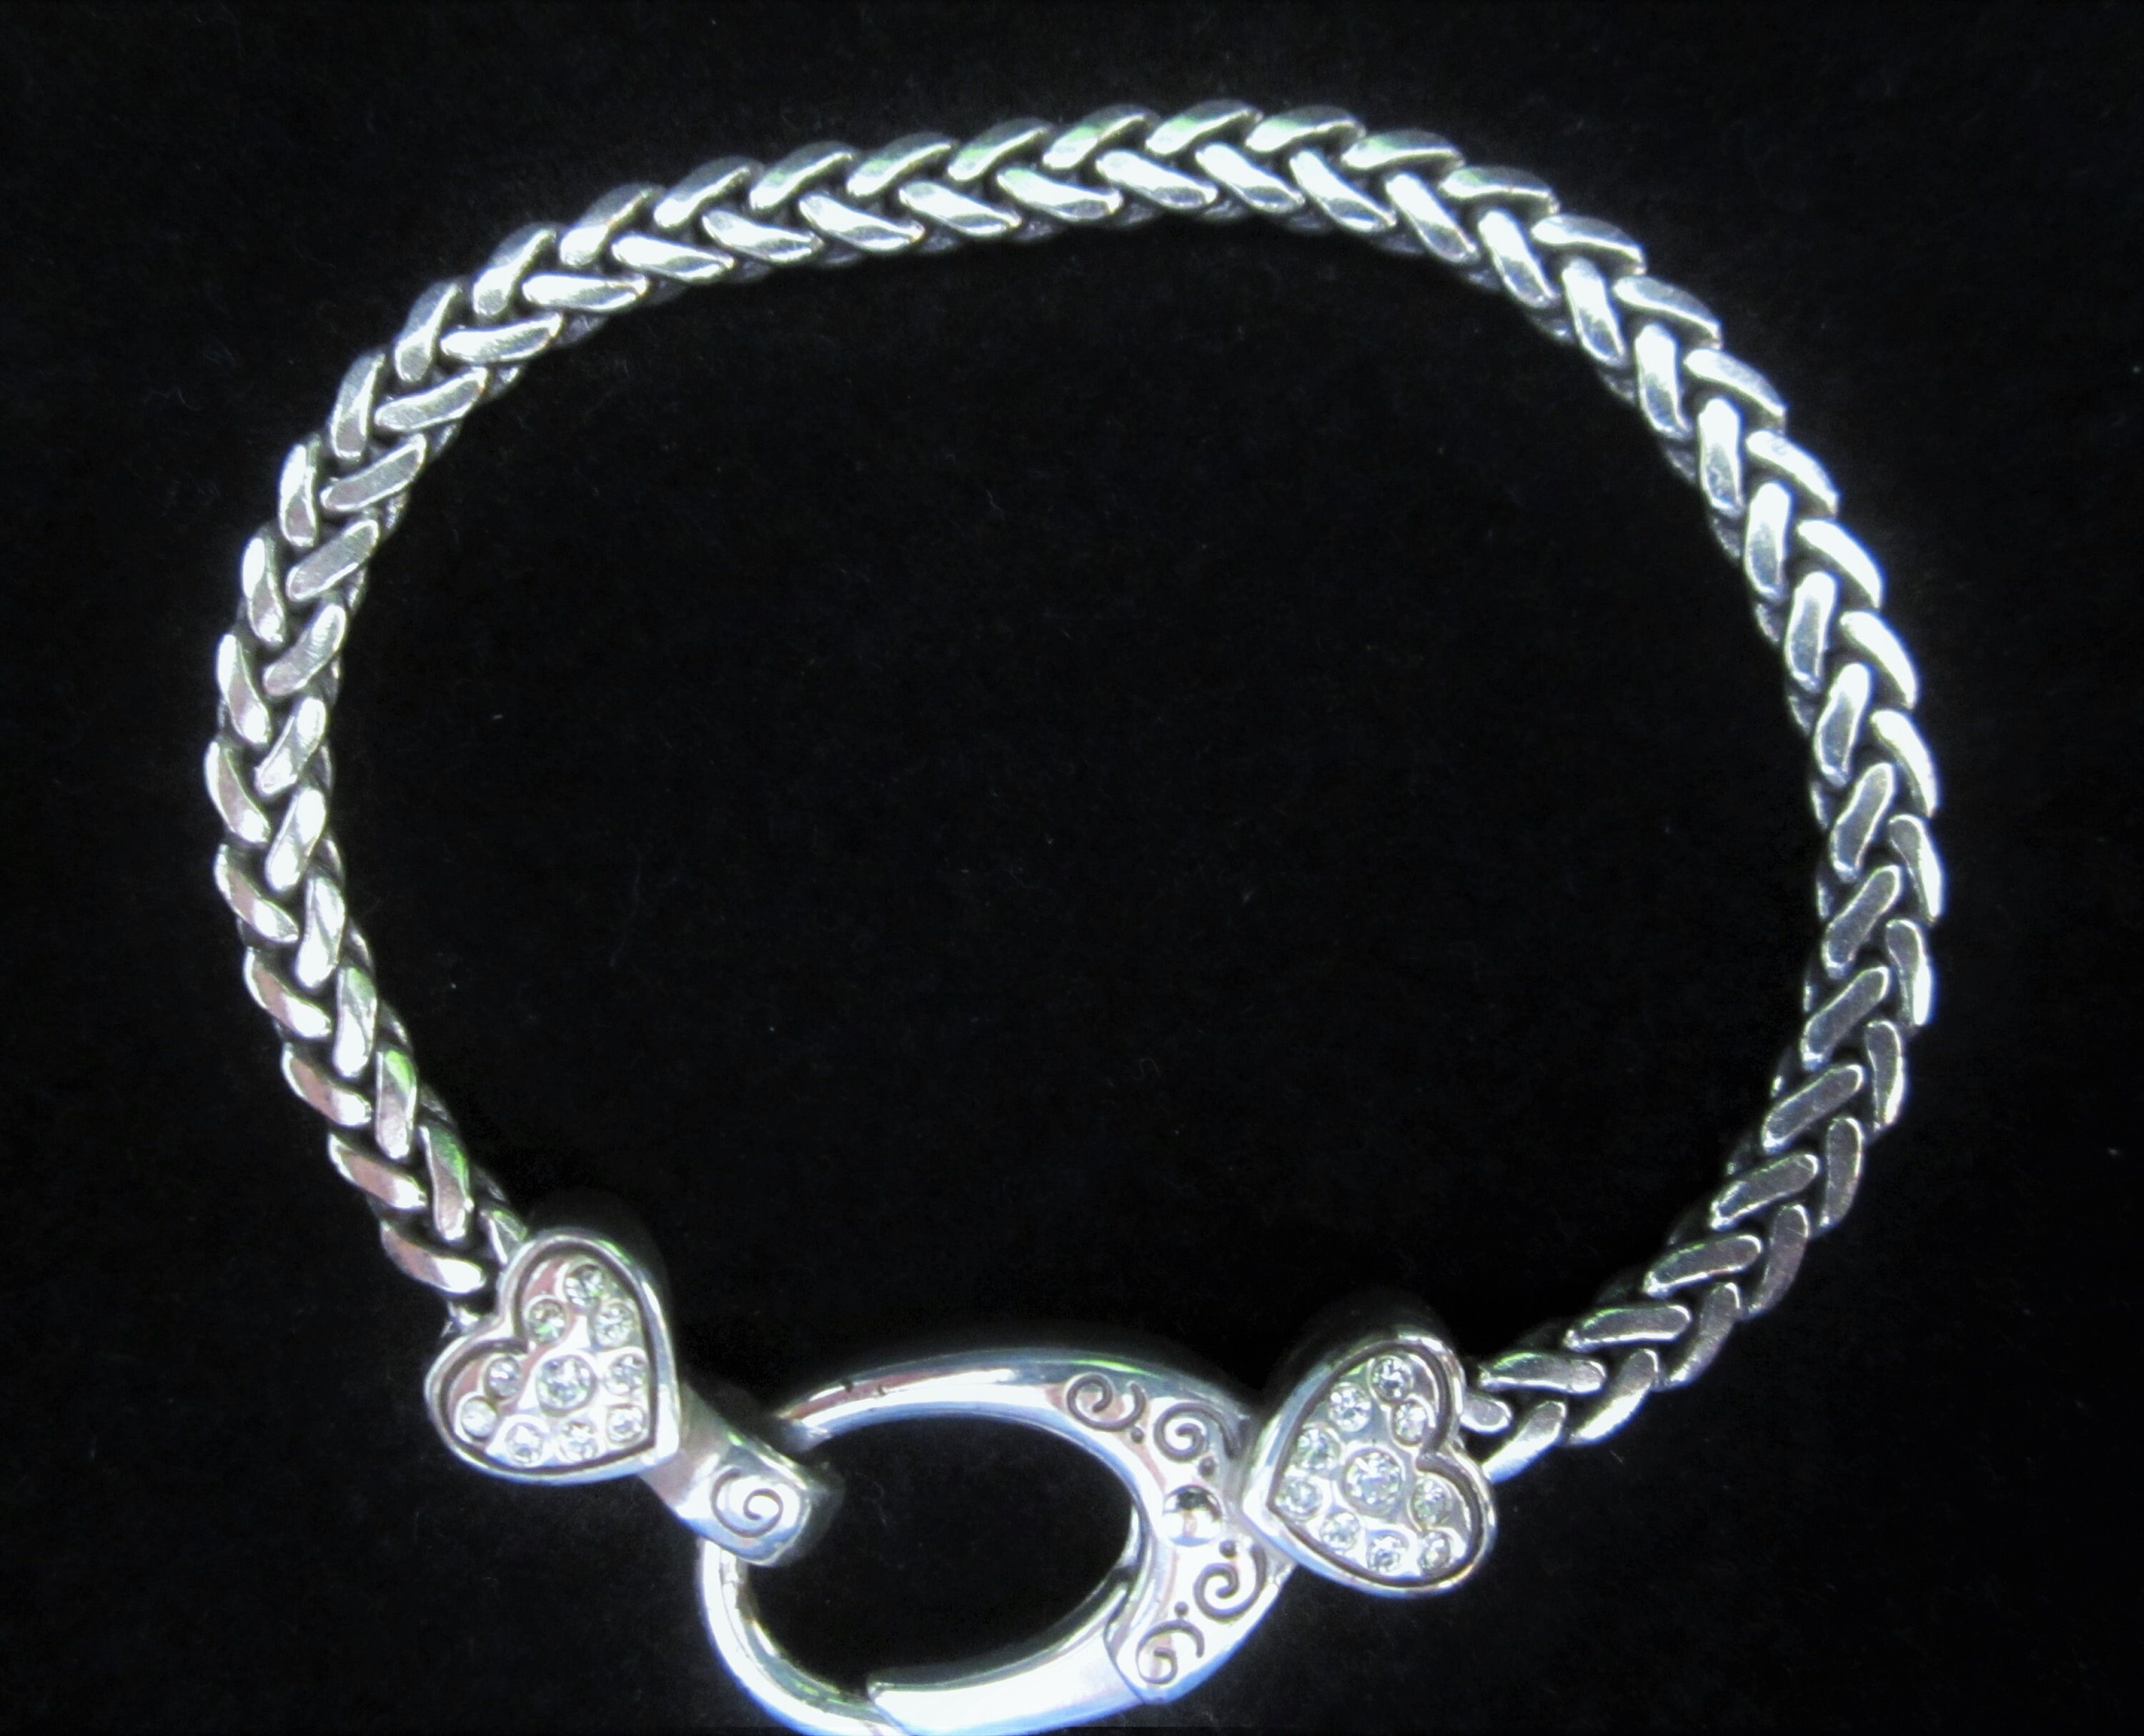 Silver Tone Snake Chain Bracelet with an ornate Tibetan Heart | Etsy